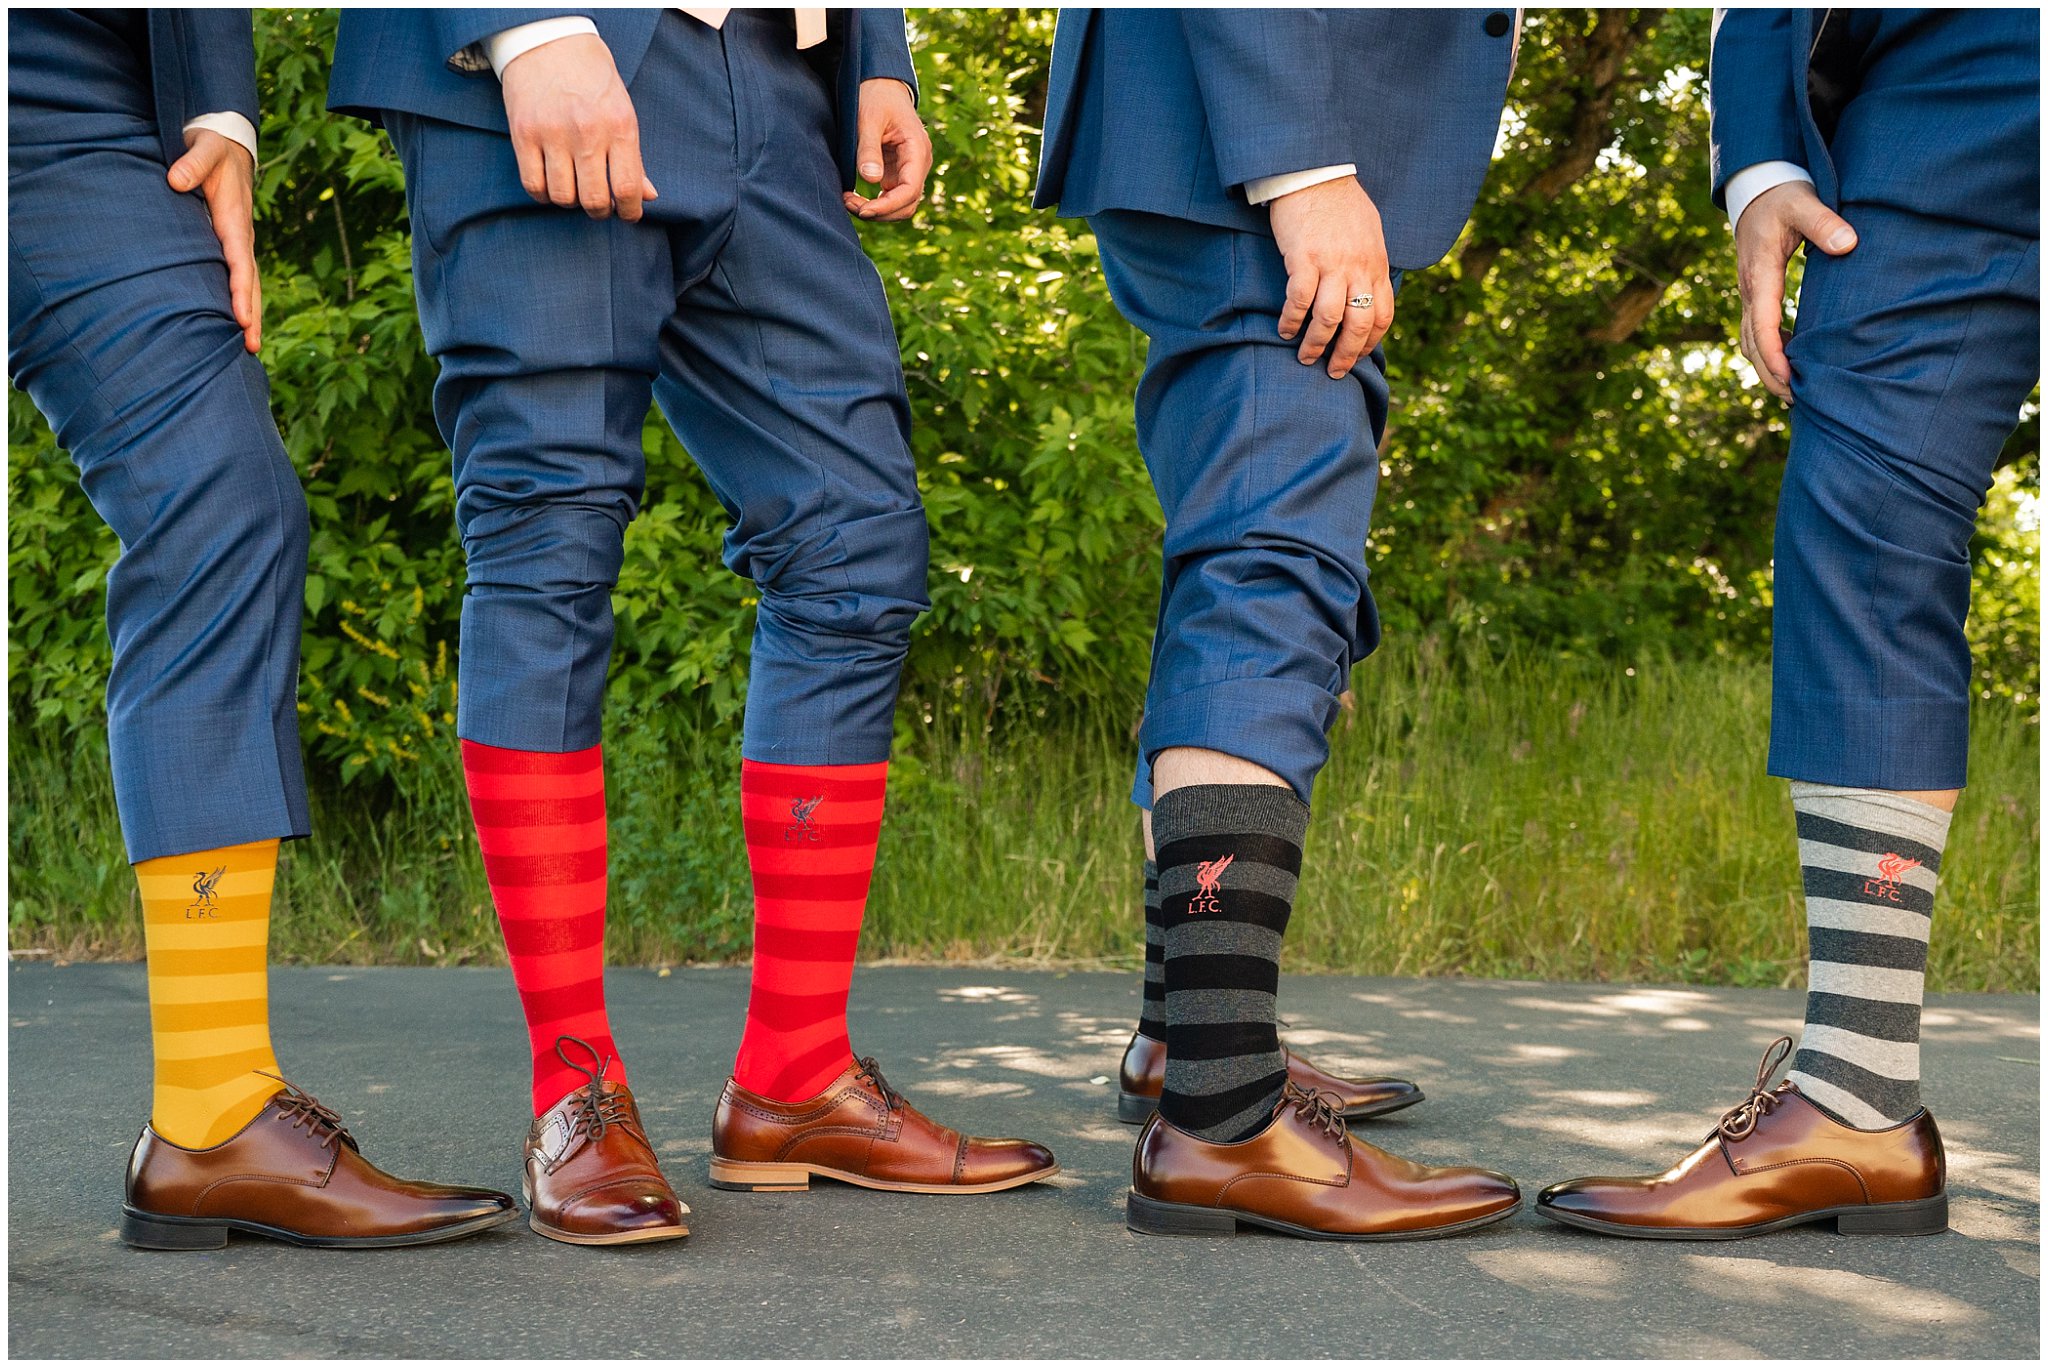 Groomsmen showing off their European soccer club socks | Oak Hills Utah Destination Wedding | Jessie and Dallin Photography